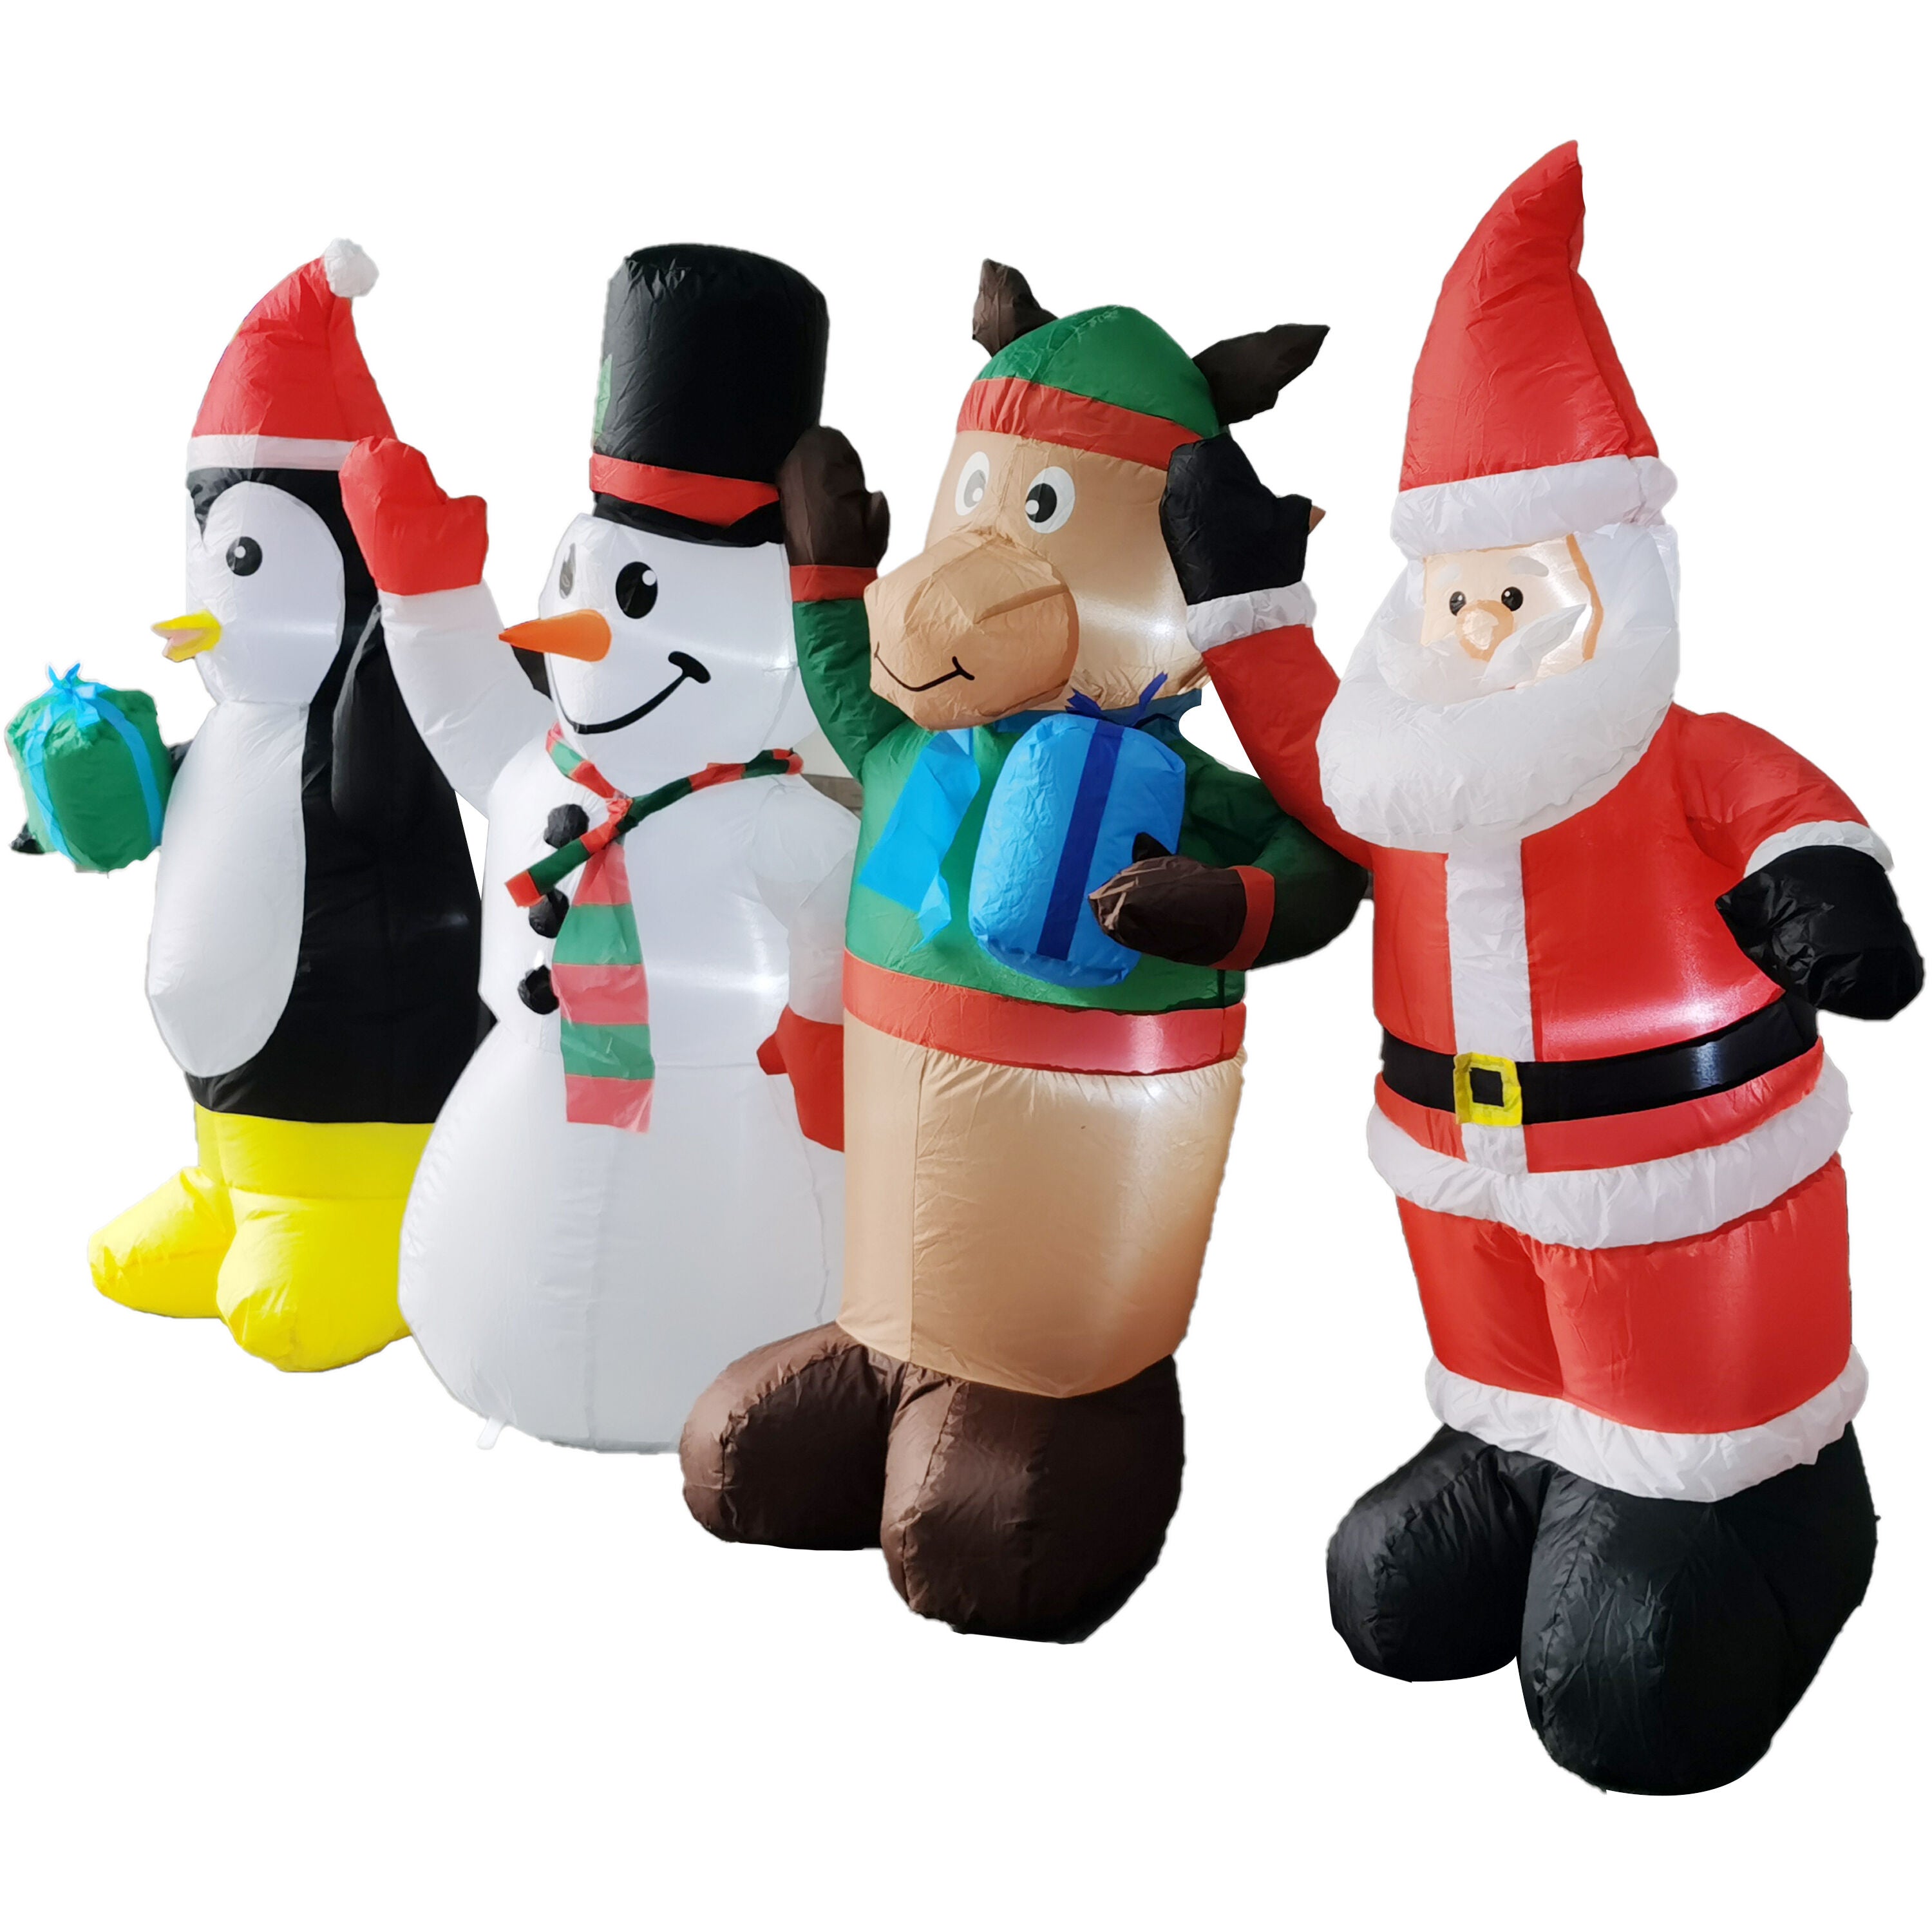 Fraser Hill Farm -  4-Ft. Tall Pre-Lit Inflatable Penguin, Snowman, Reindeer, and Santa Friends